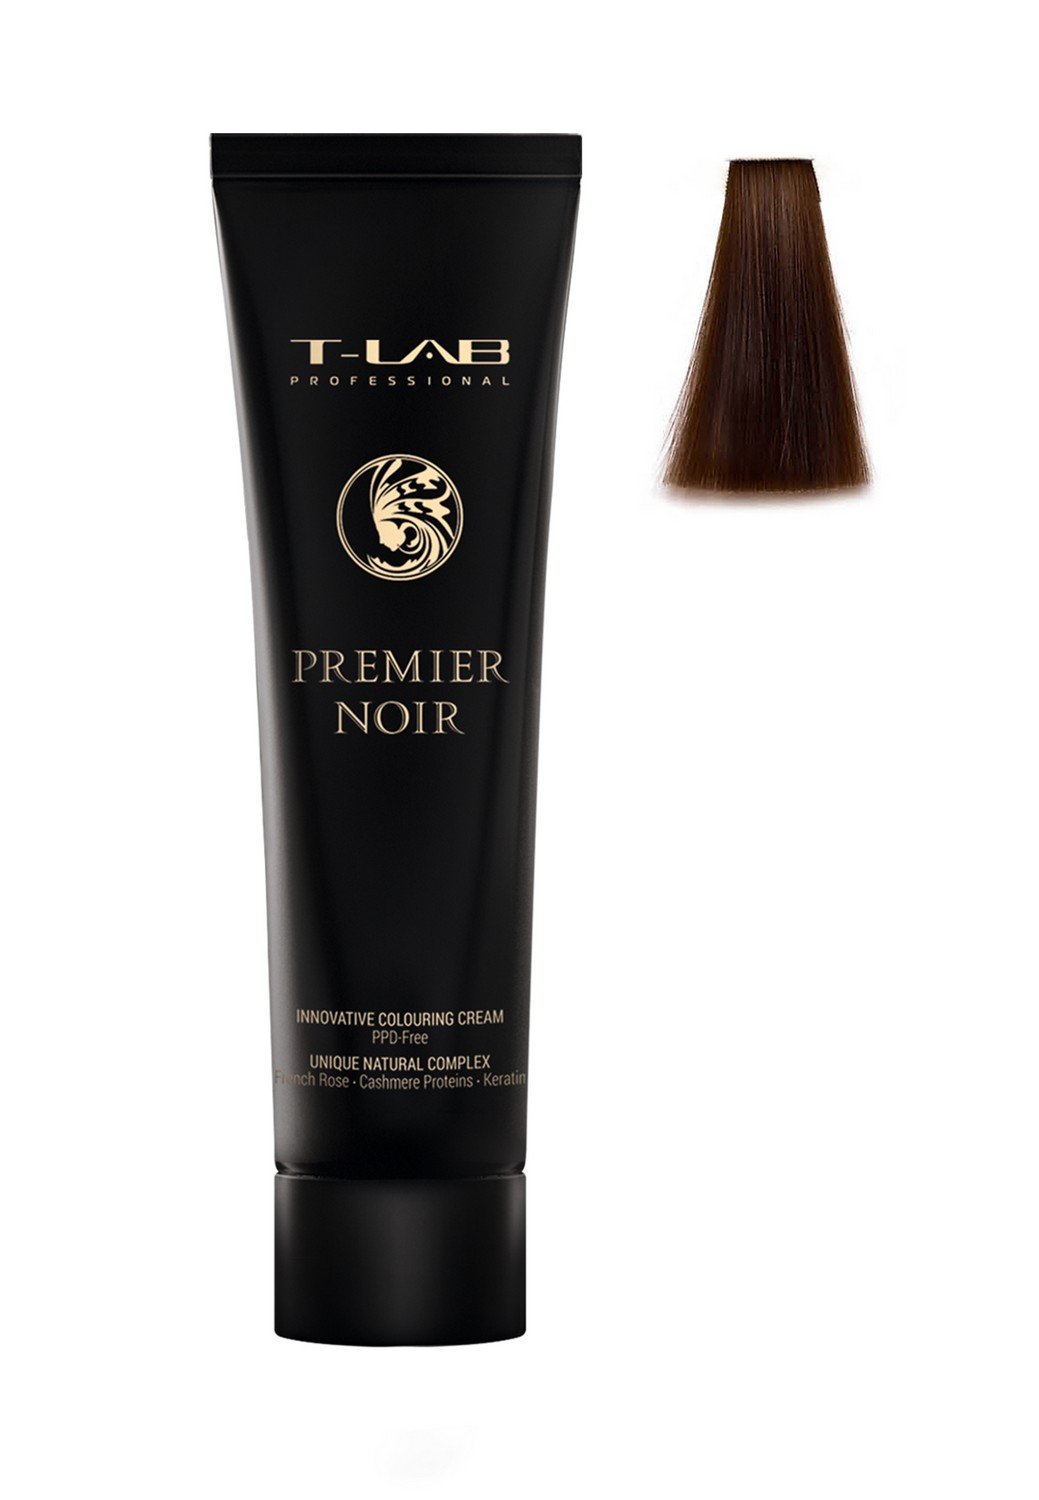 Крем-краска T-LAB Professional Premier Noir colouring cream, оттенок 6.32 (dark golden iridescent blonde) - фото 2